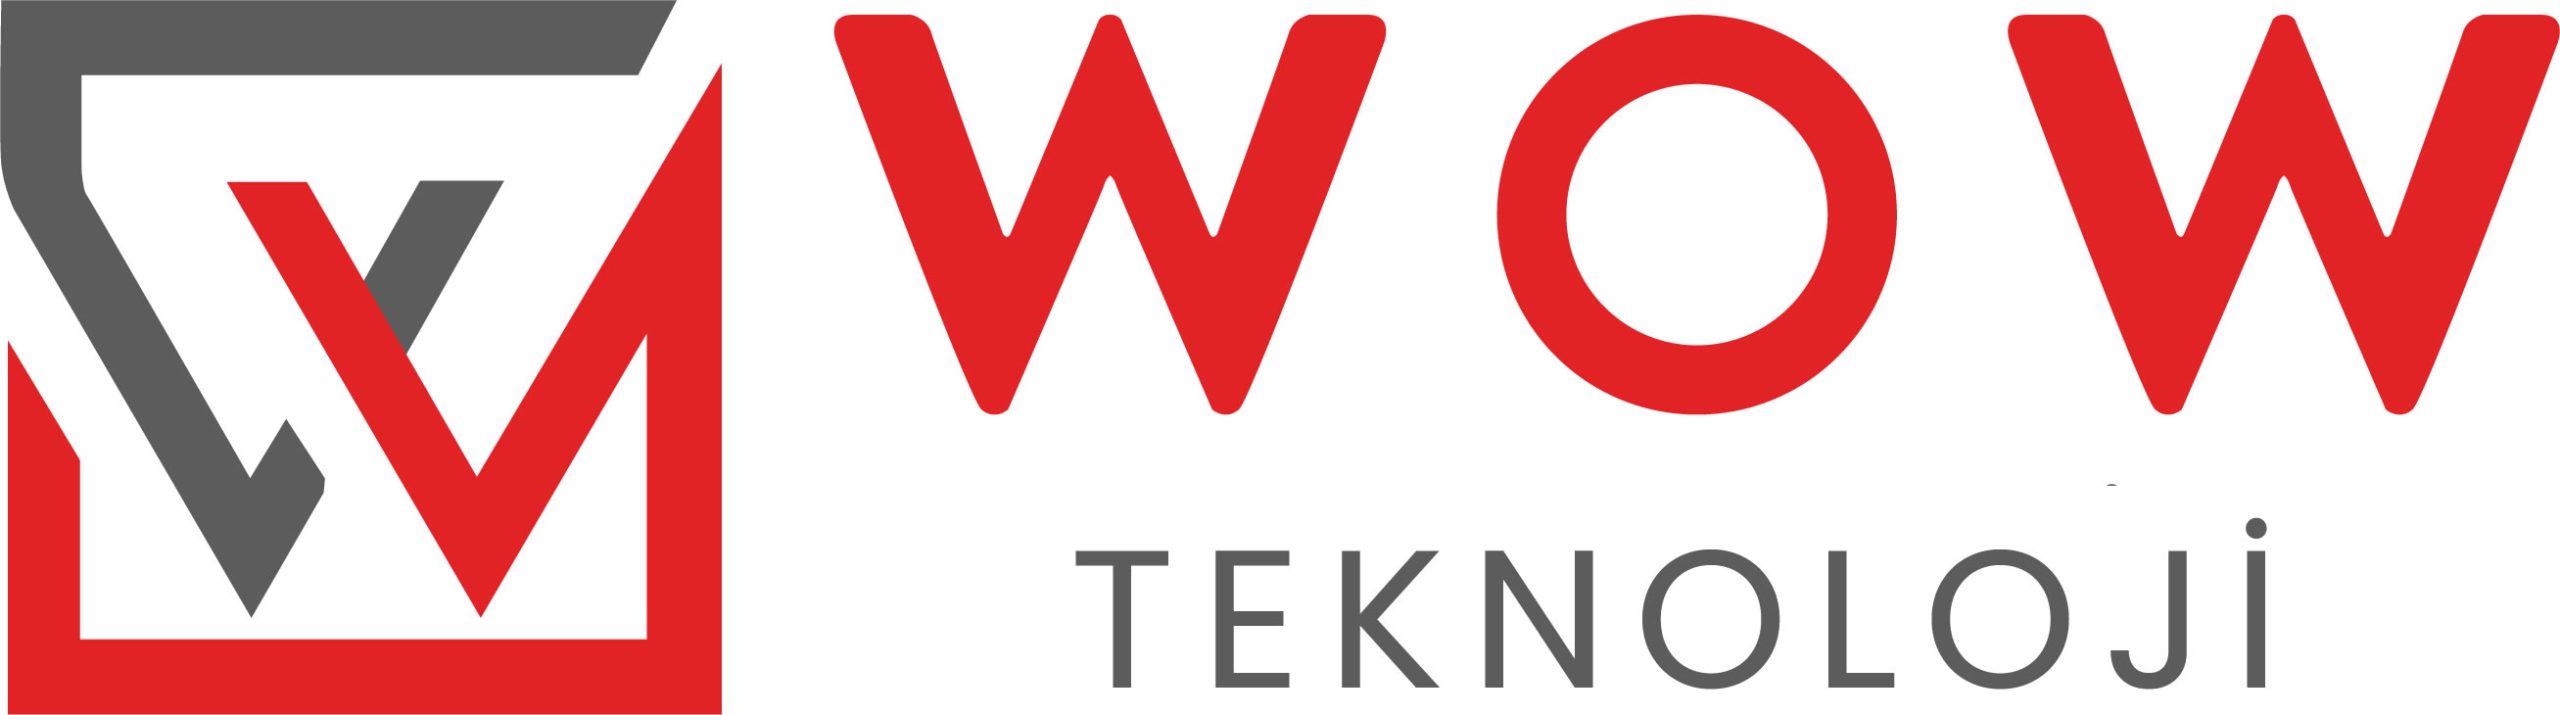 wow-teknoloji-logo